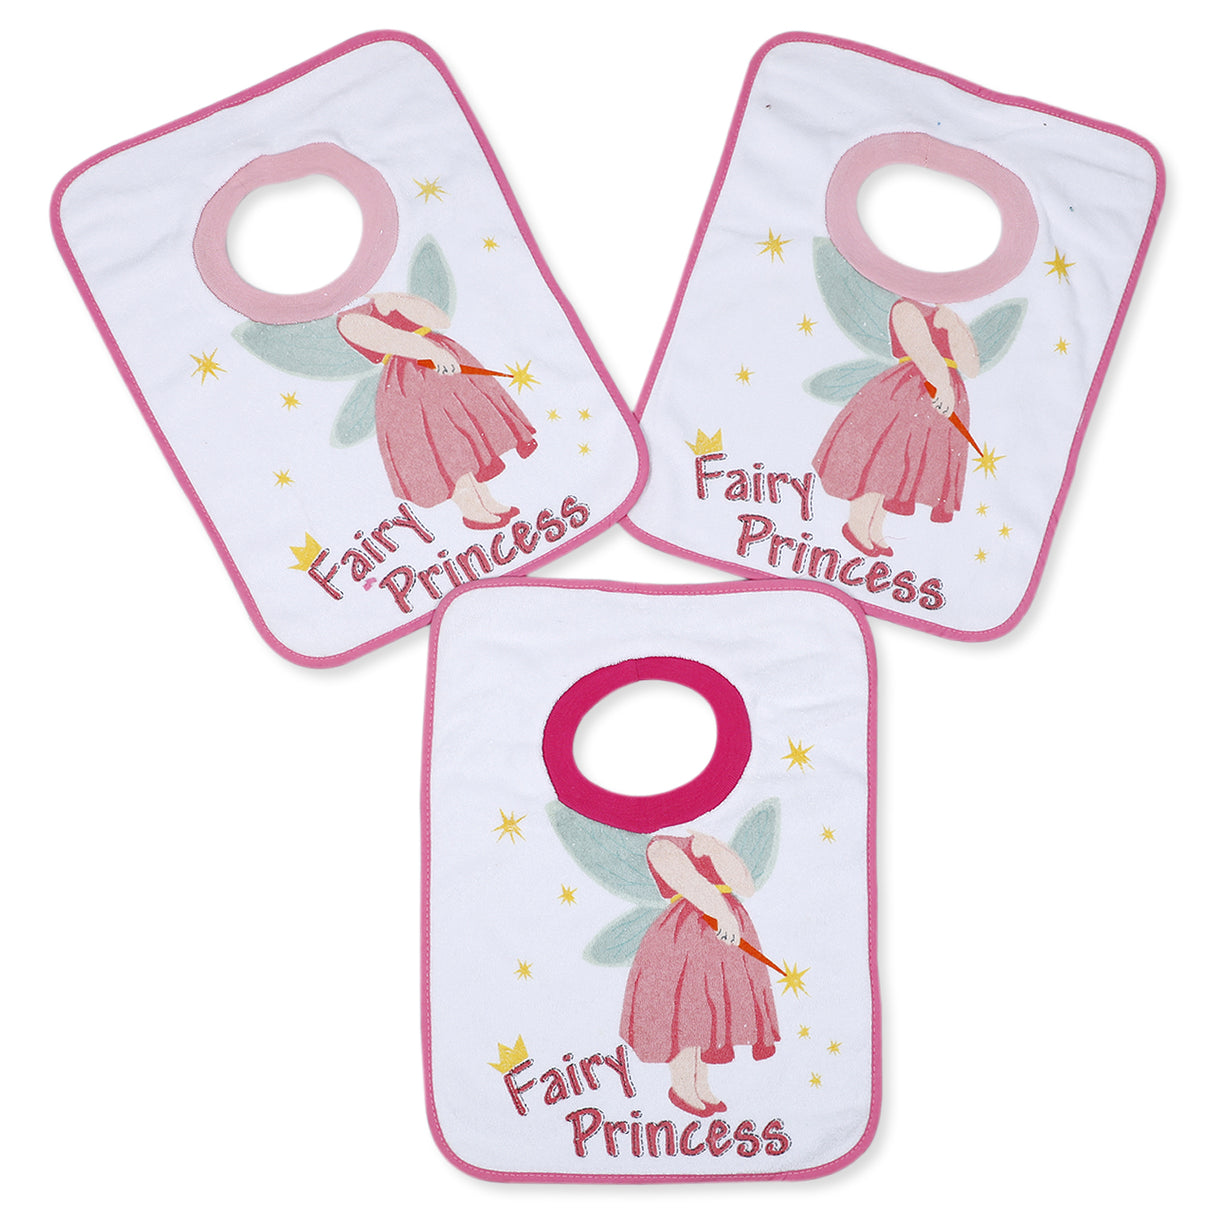 Fairy Princess Pack Of 3 Cotton Bibs